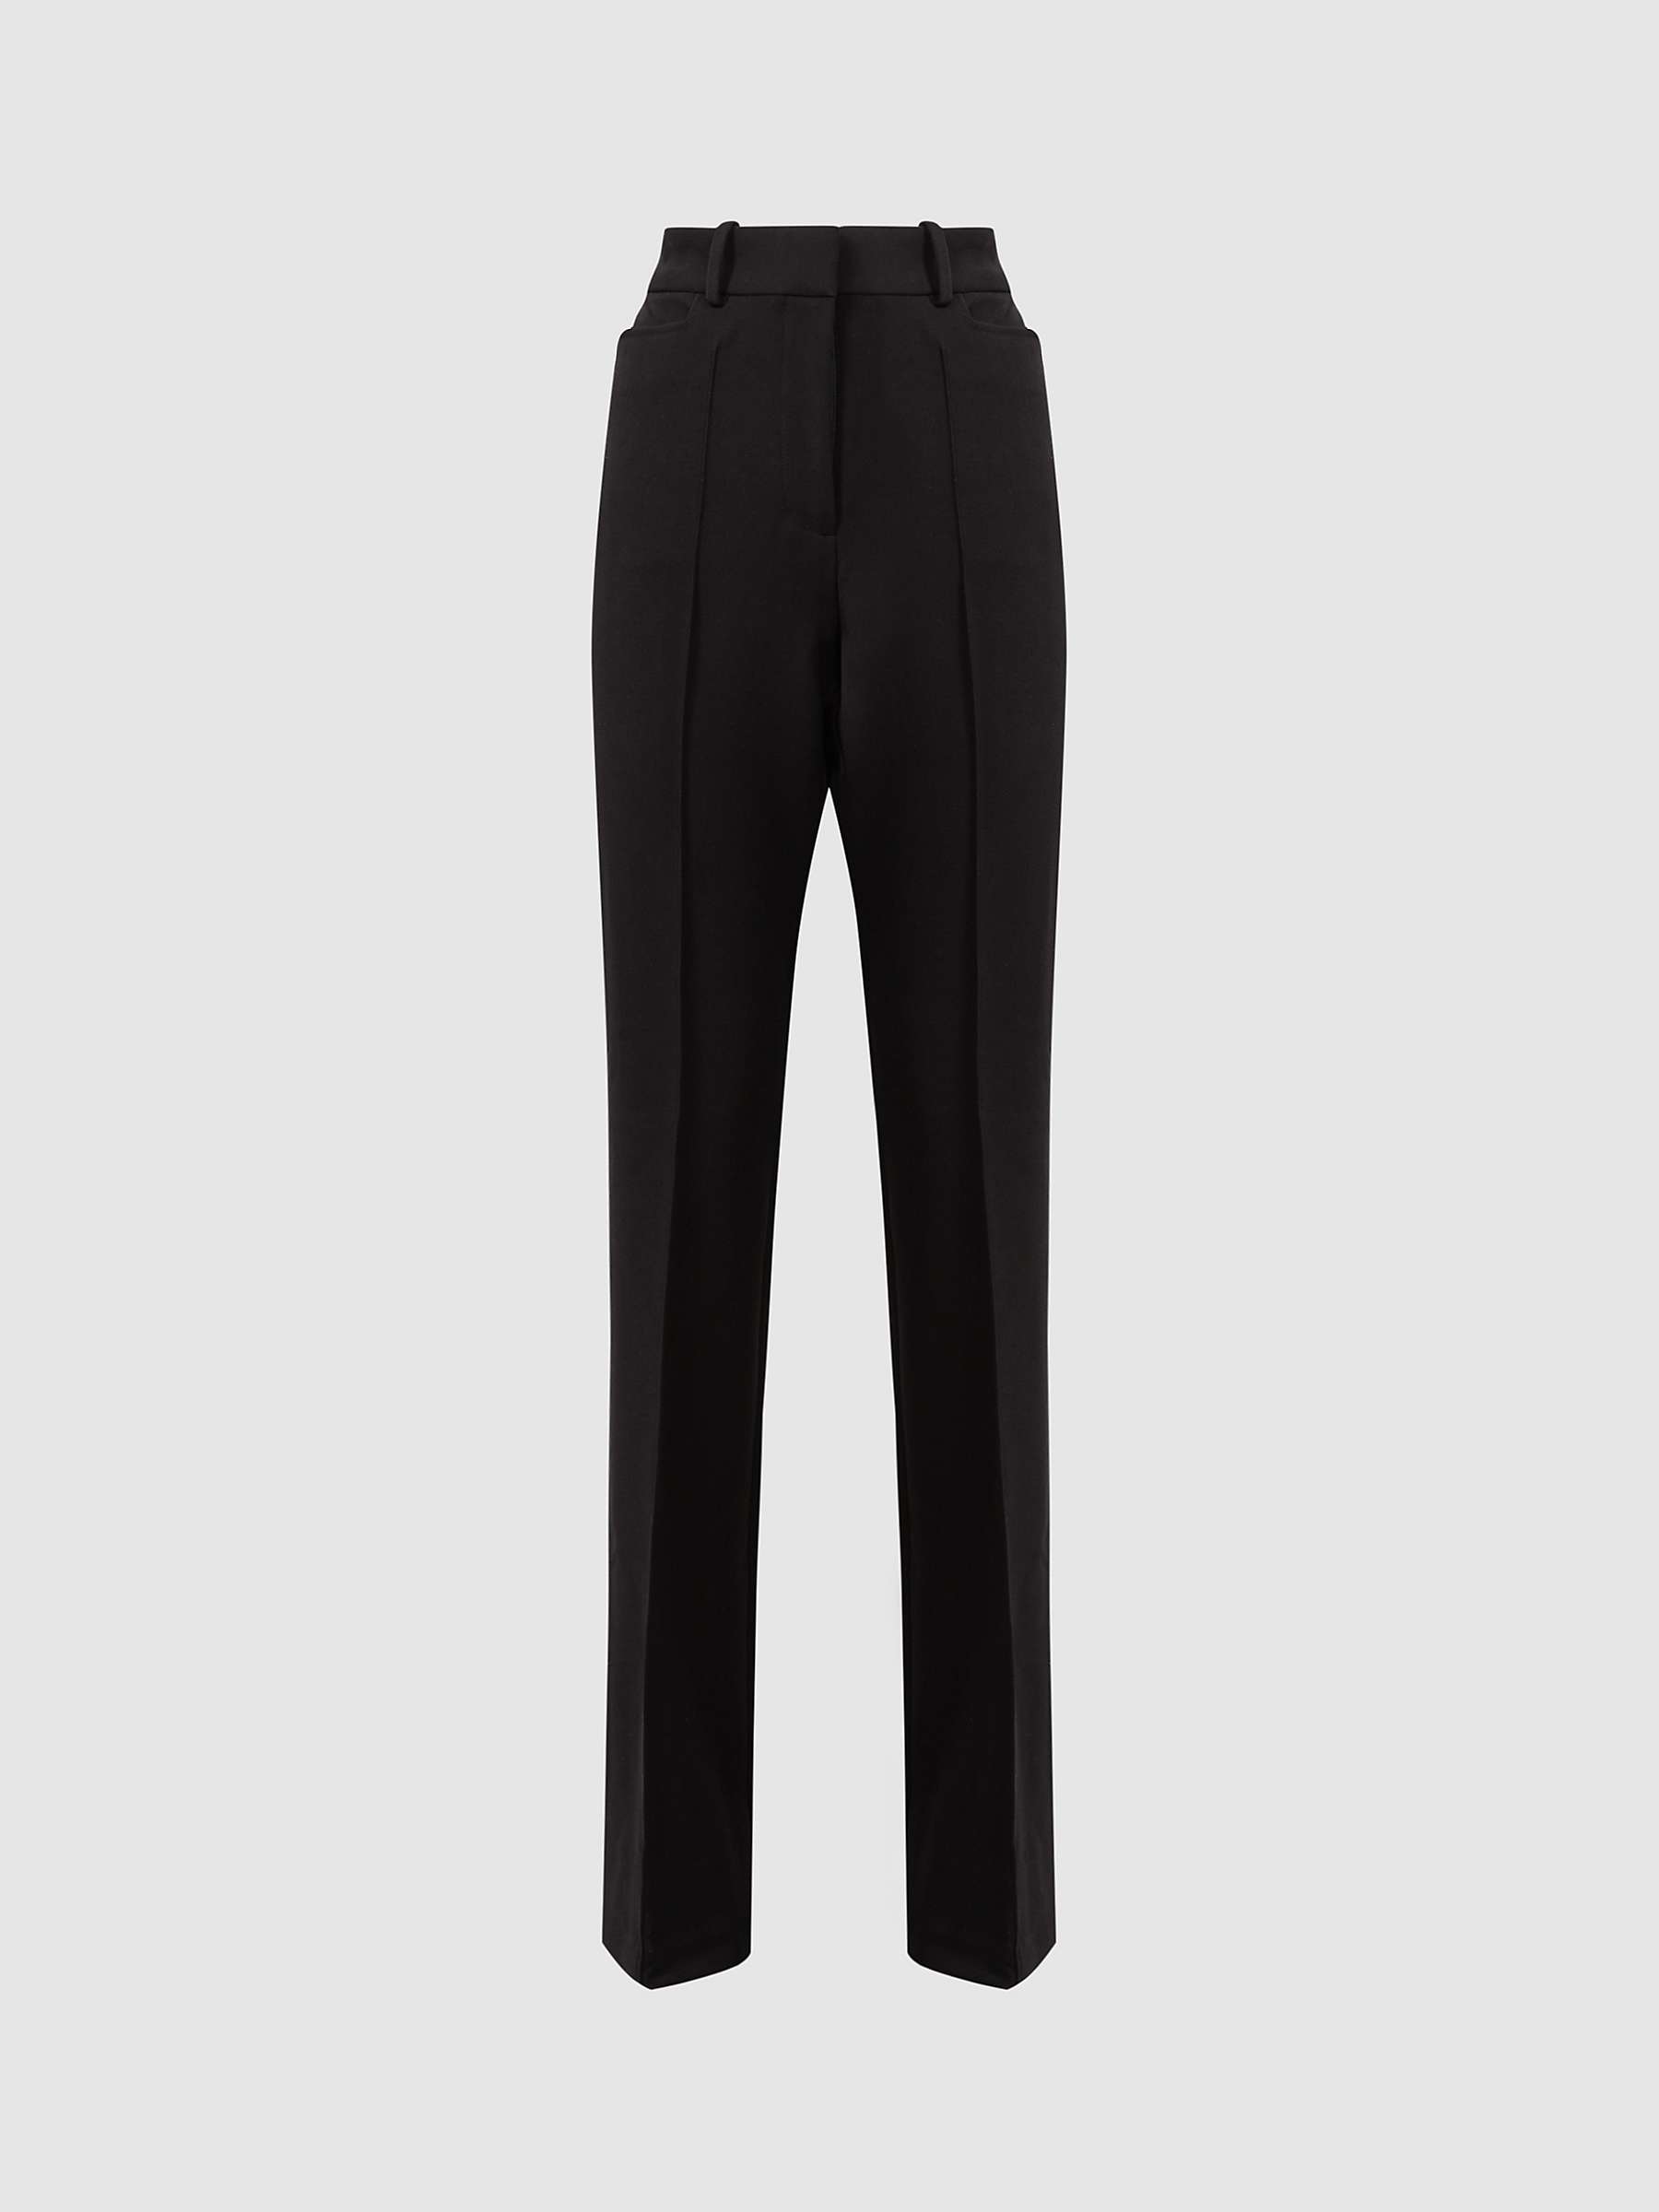 Buy Reiss Gabi Slim Fit Tailored Suit Trousers Online at johnlewis.com